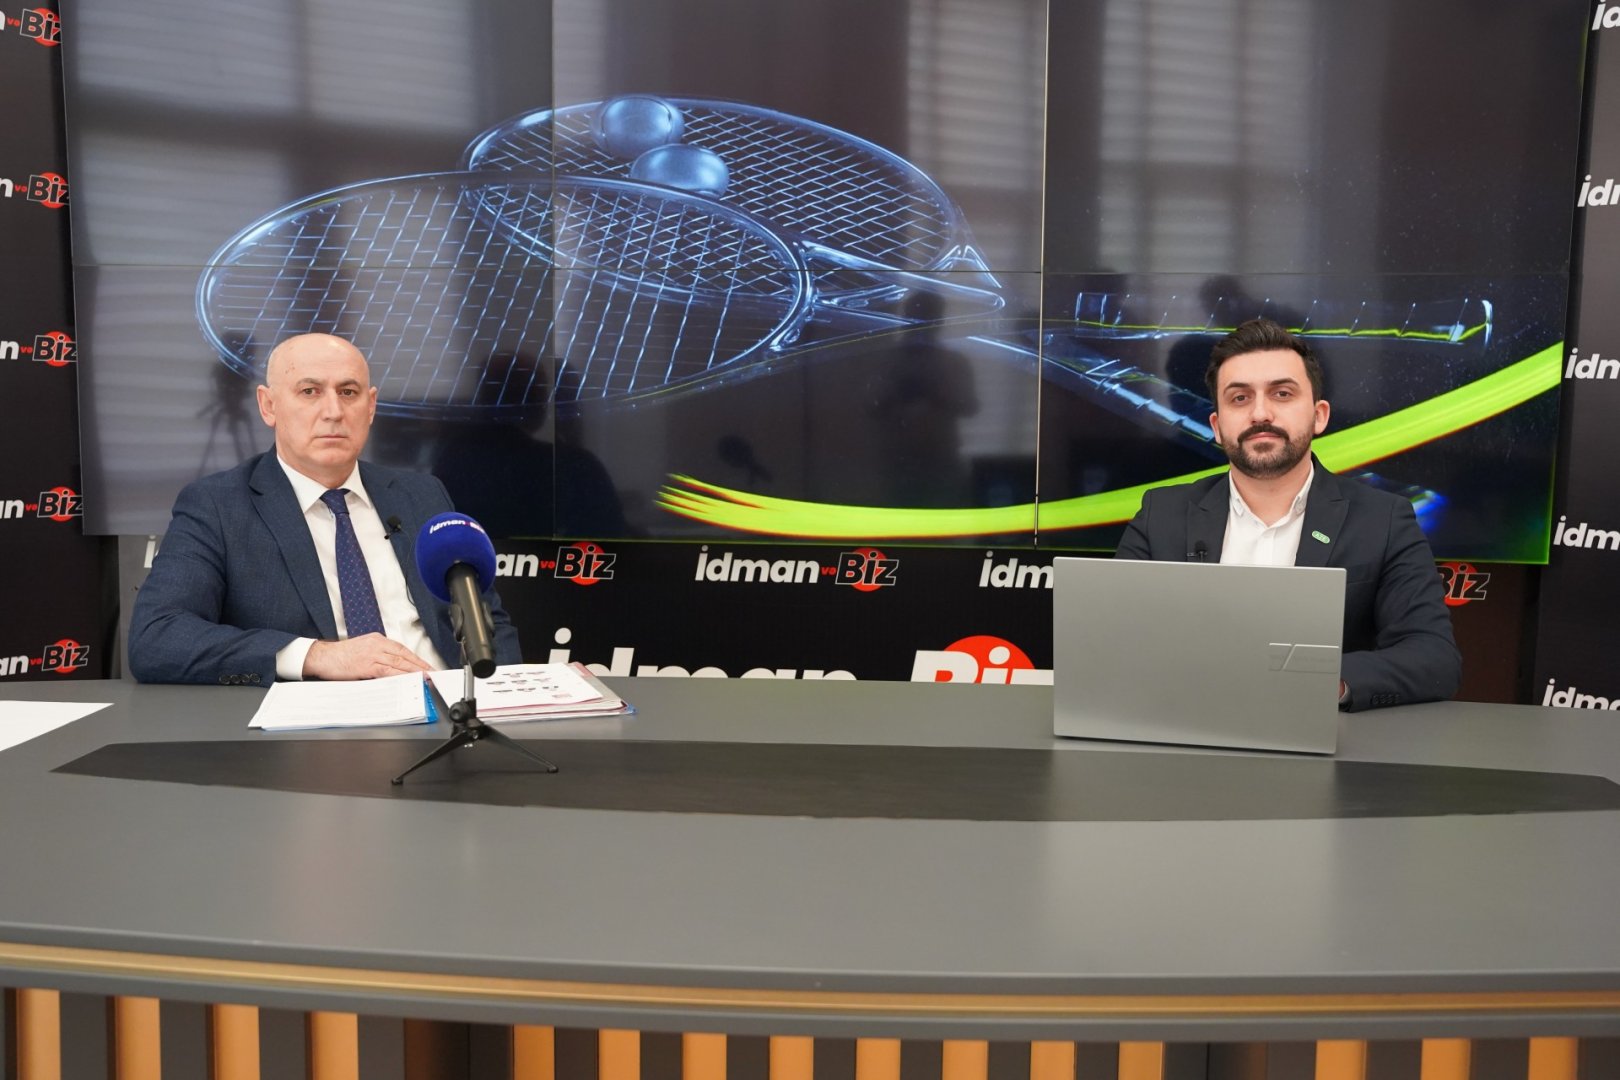 'Idman Bizdə' hosts former member of AFFA Executive Committee (VIDEO)